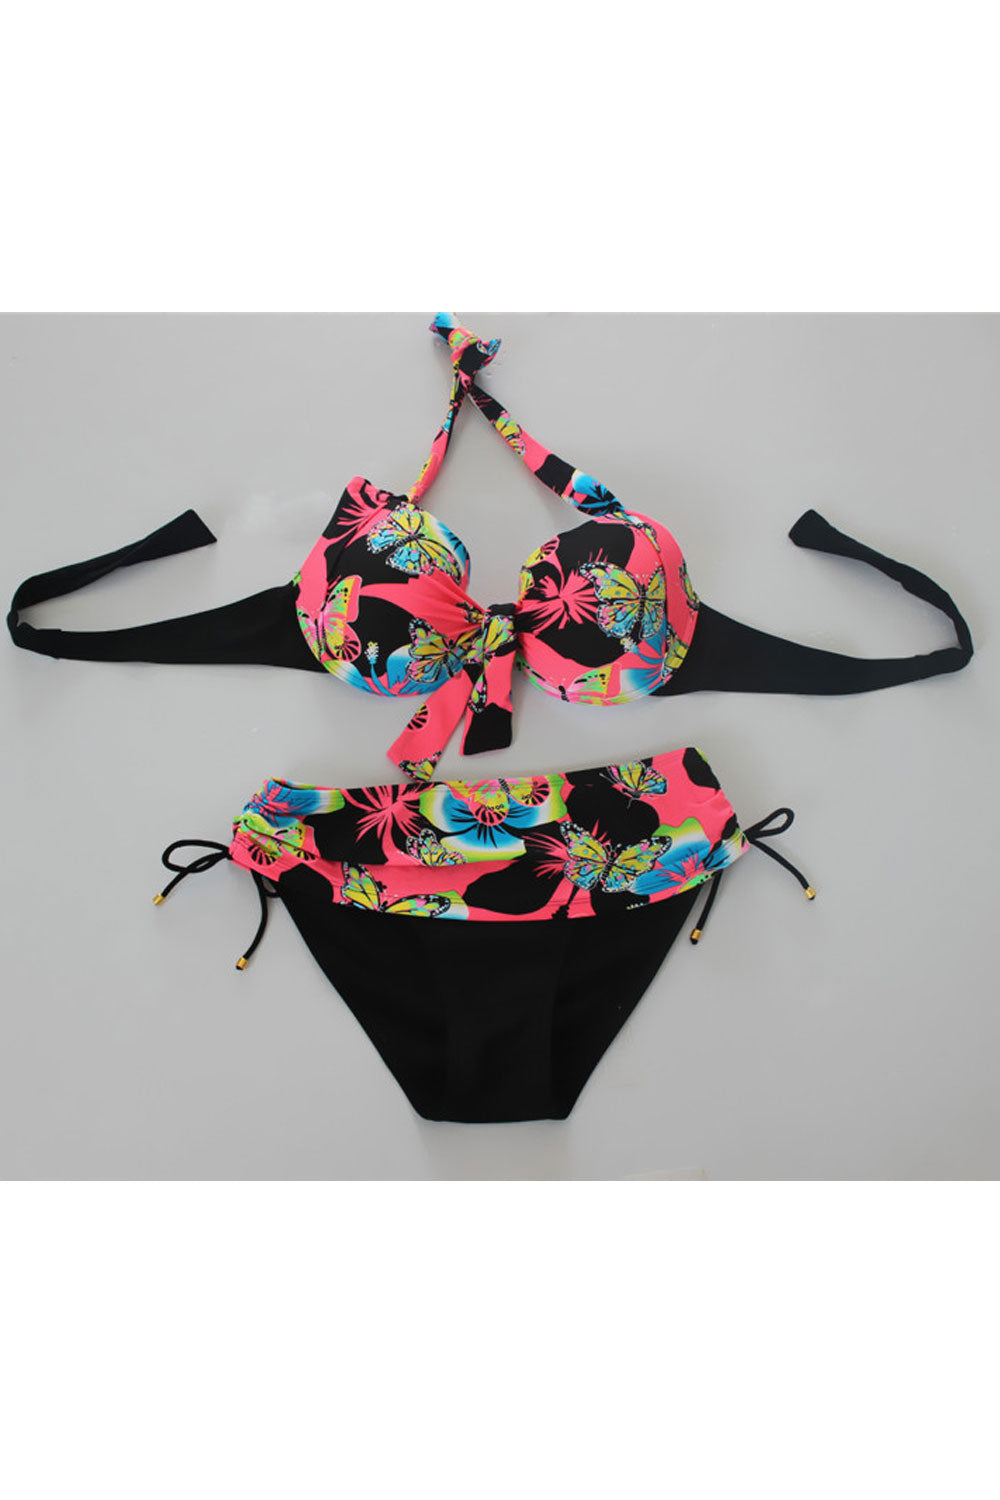 Jhon Peters Women Modern Tie Strap Printed Summer Two Piece Swimsuit-JPWSW72358